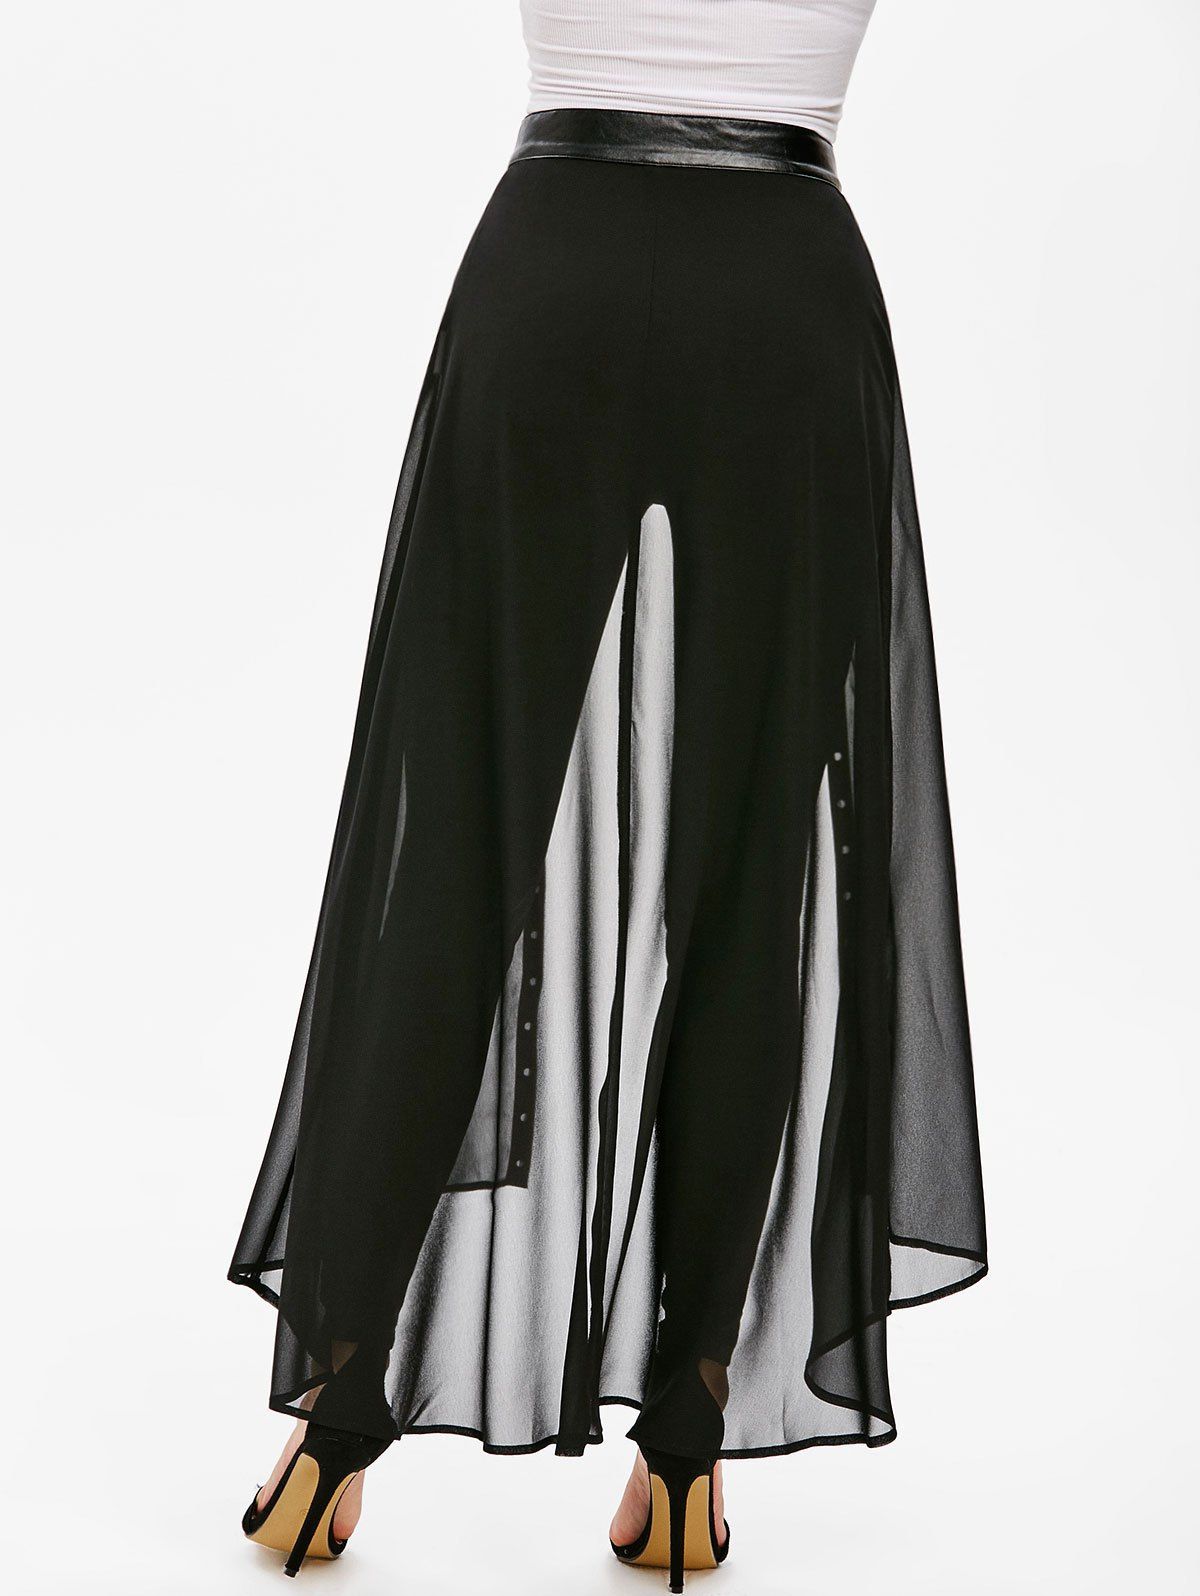 [36% OFF] 2020 Belted Slim Pants With Skirt Overlay In BLACK | DressLily